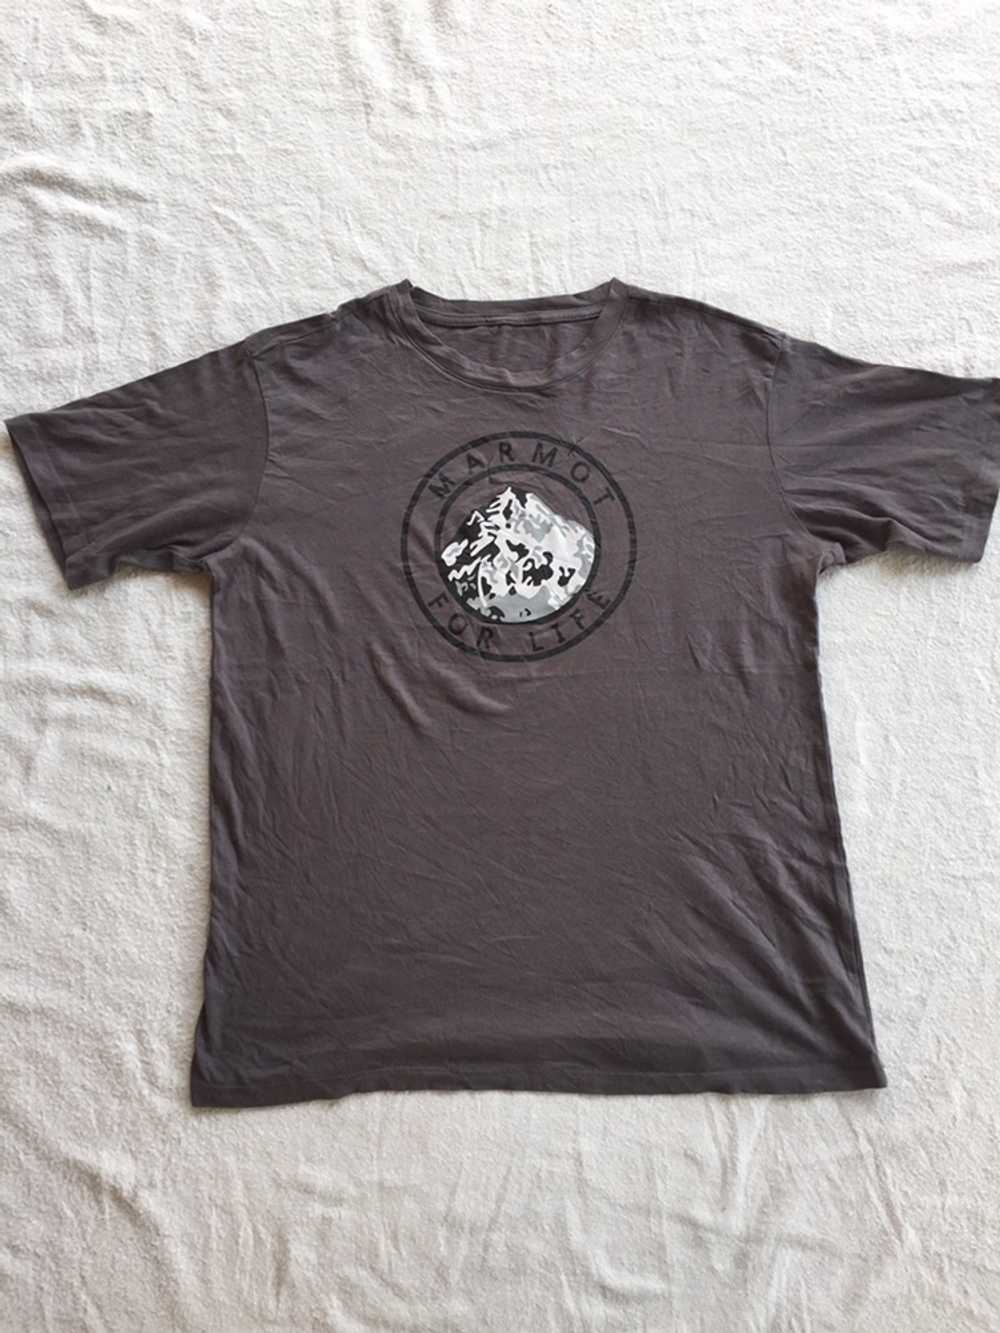 Marmot - Marmot Outdoors T shirt - image 1